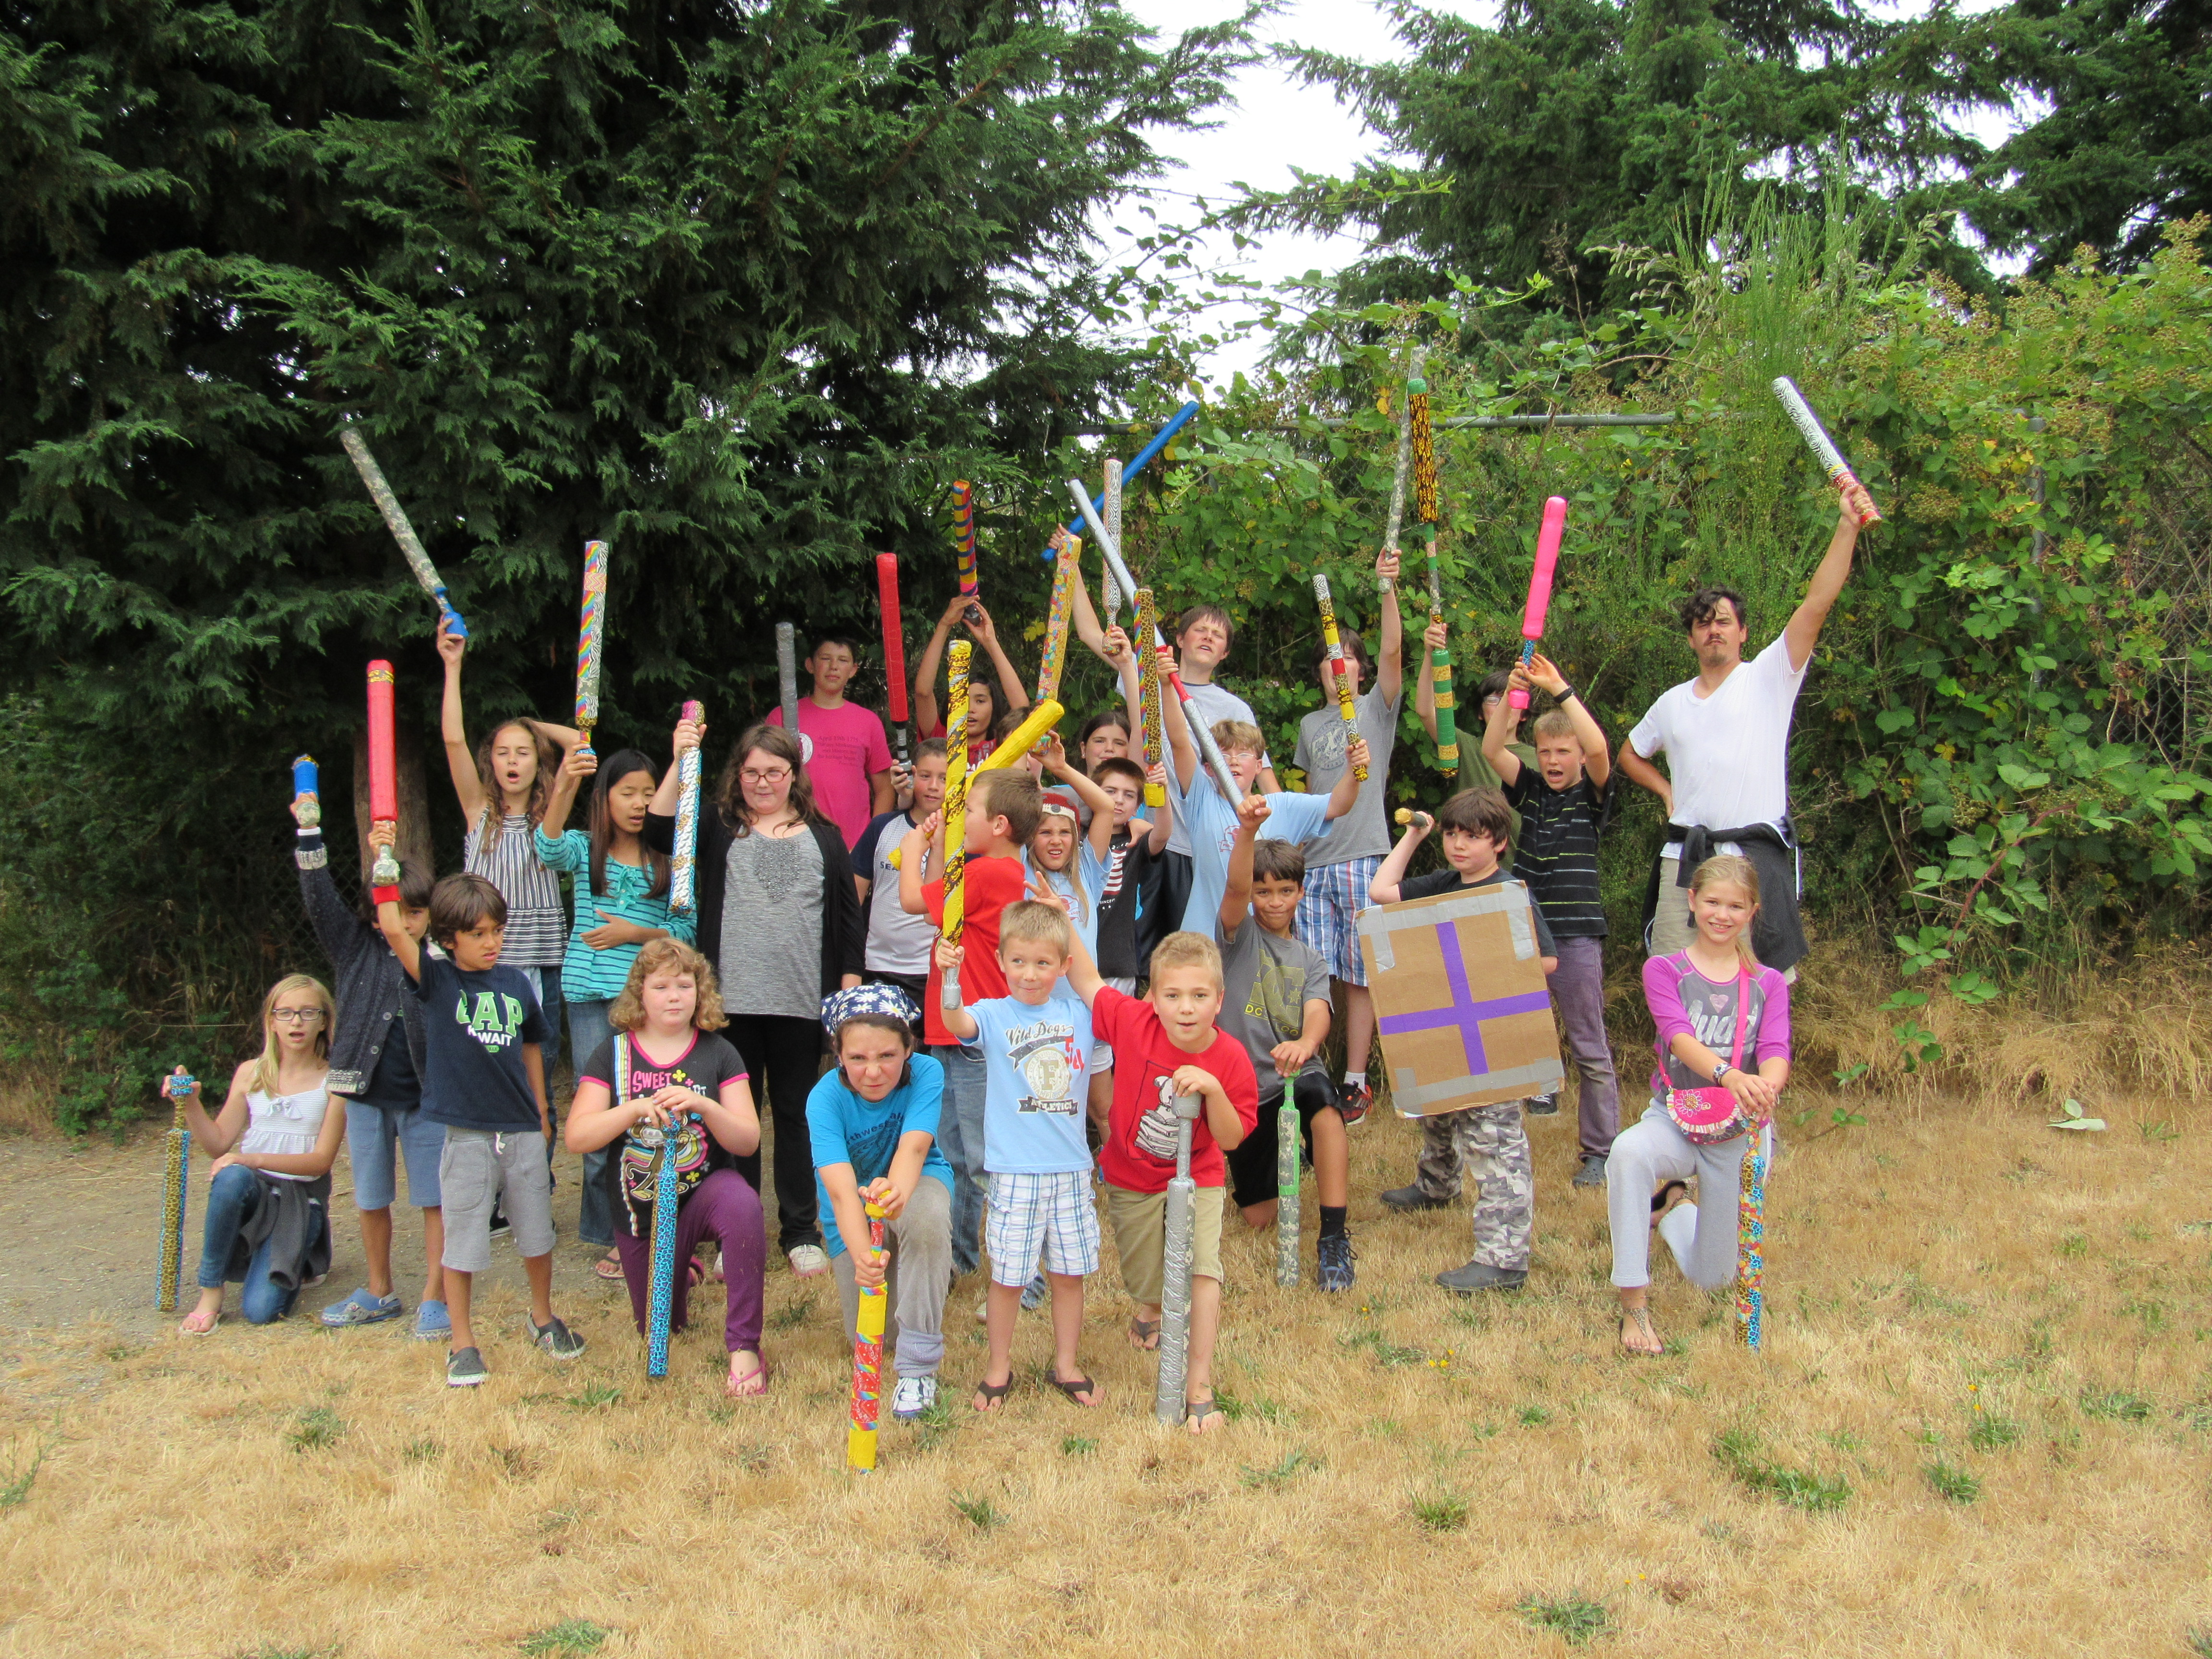 Large group of kids holding boffer swords